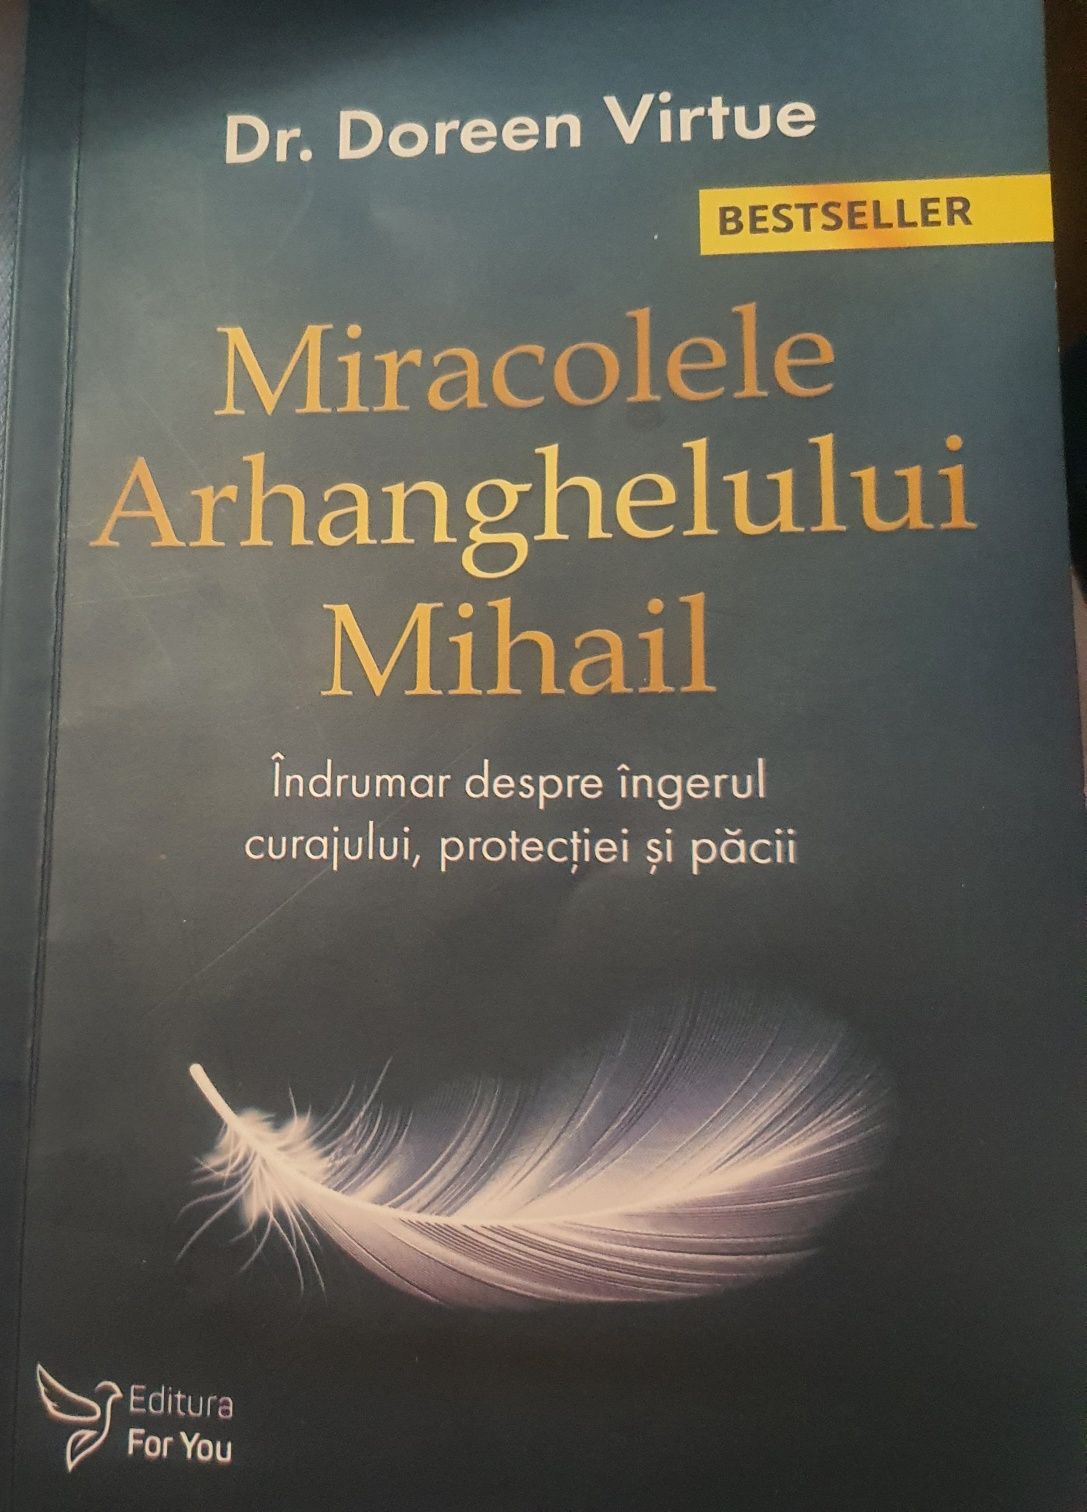 Miracolele arhanghelului Mihail-Doreen Virtue
-